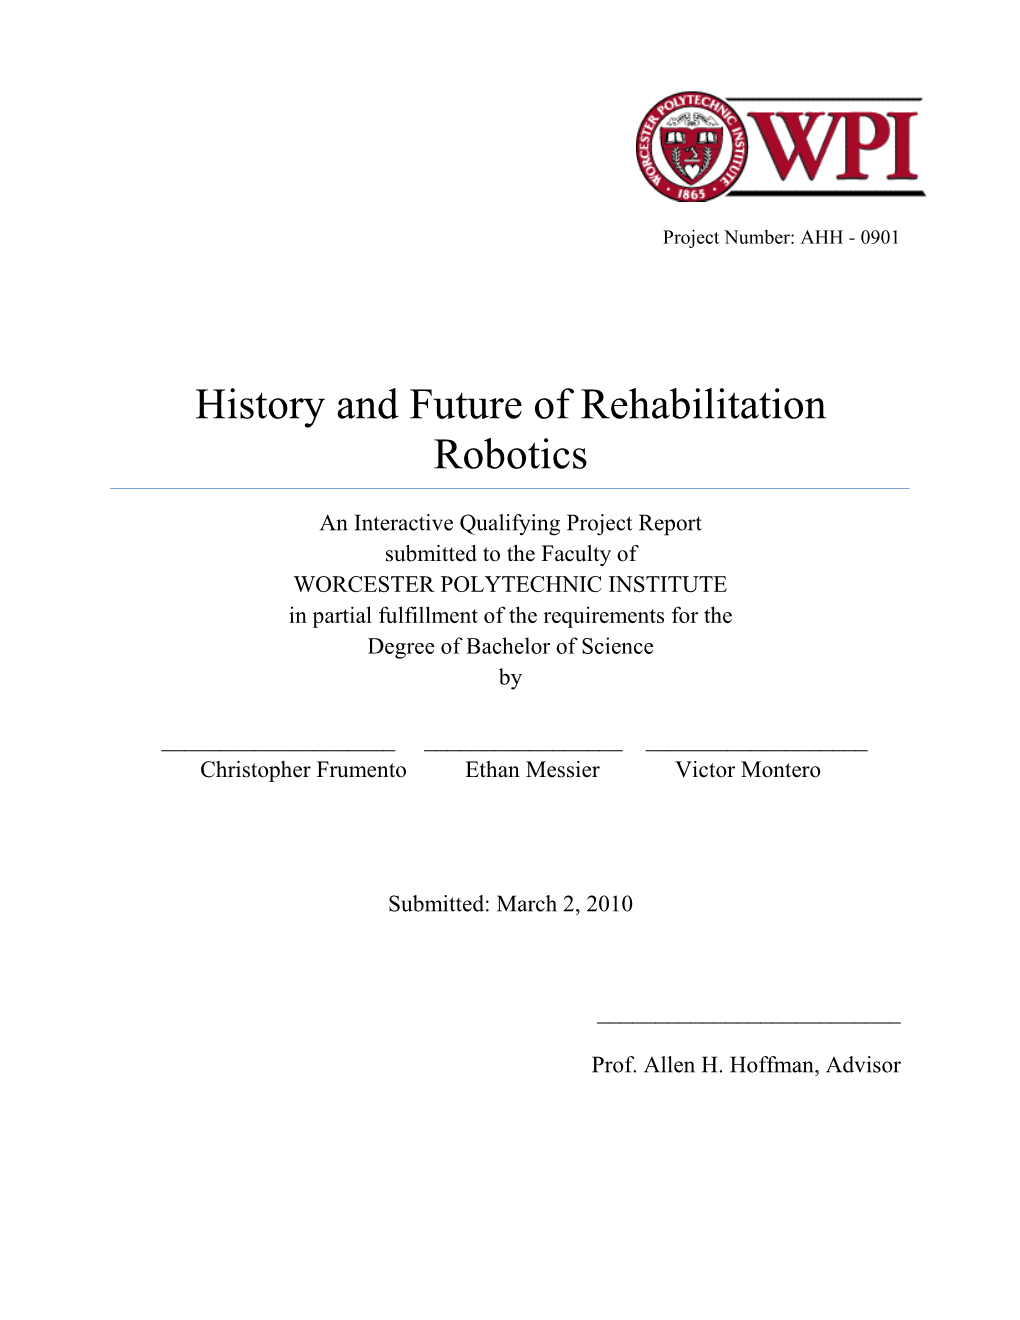 History and Future of Rehabilitation Robotics